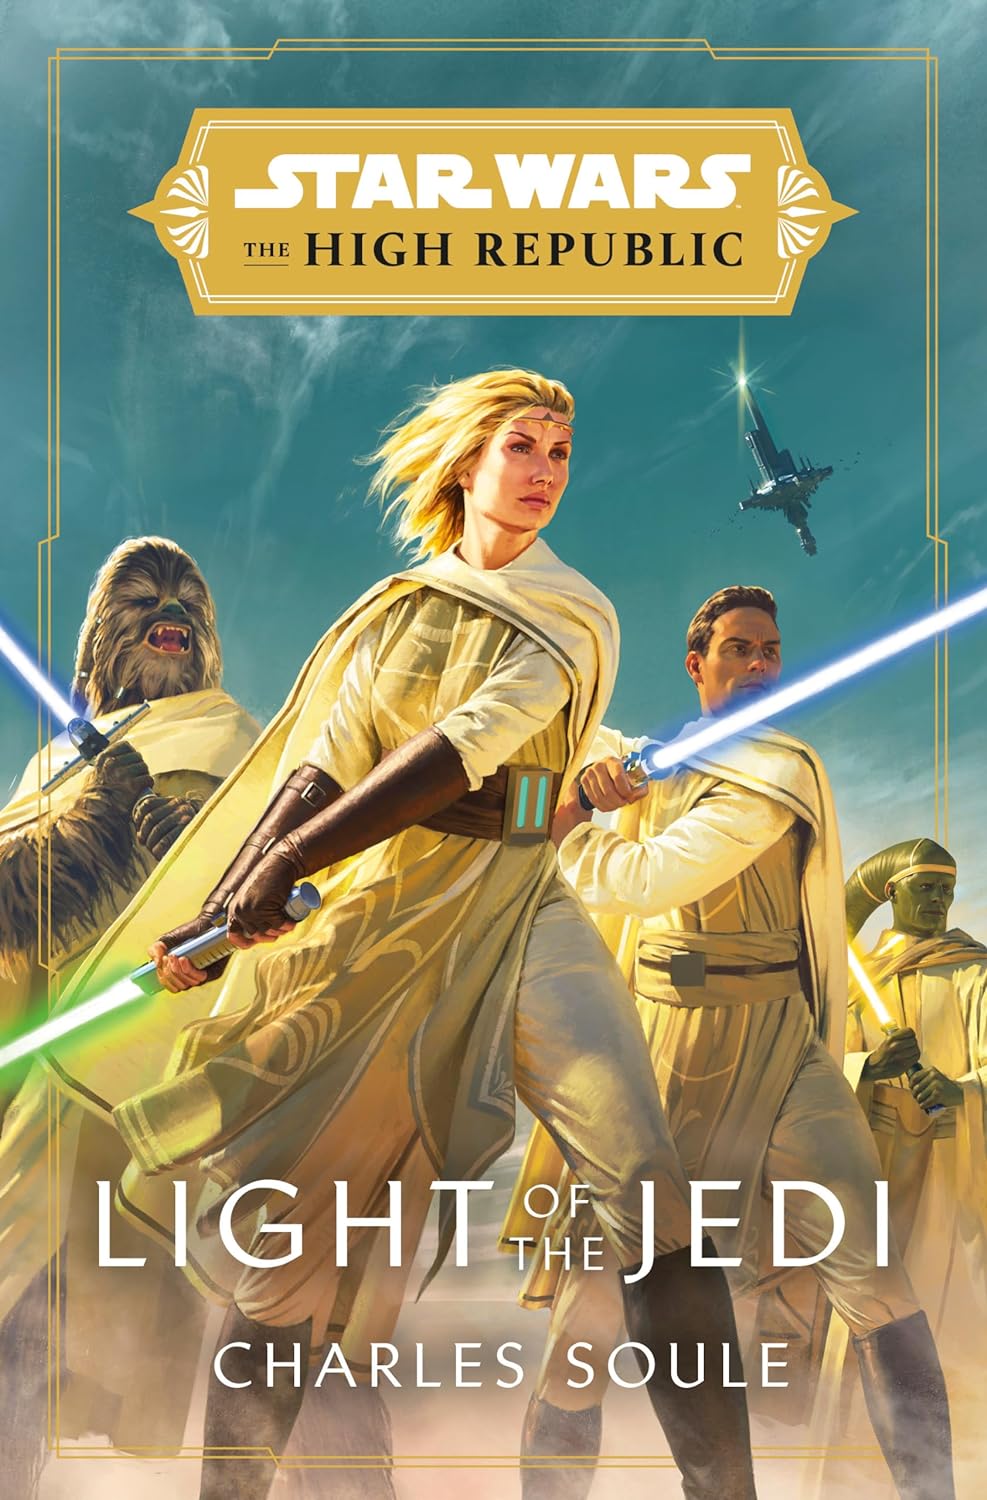 Charles Soule, Marc Thompson: Star Wars: Light of the Jedi (AudiobookFormat, 2021, Random House Audio)